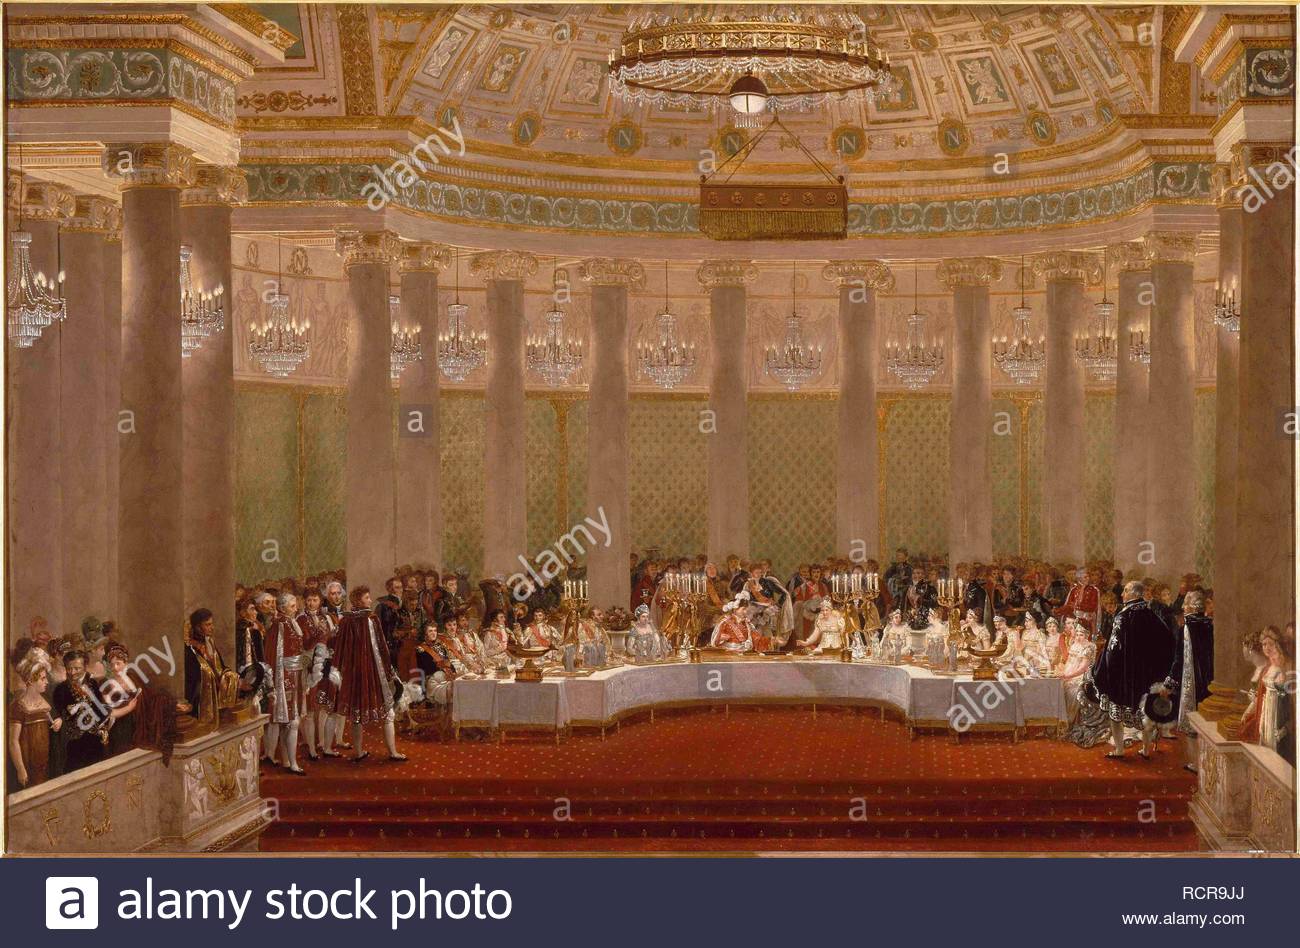 the marriage banquet of napoleon i and marie louise of austria april 2 1810 museum muse national du chateau de fontainebleau author dufay alexandre benot jean RCR9JJ